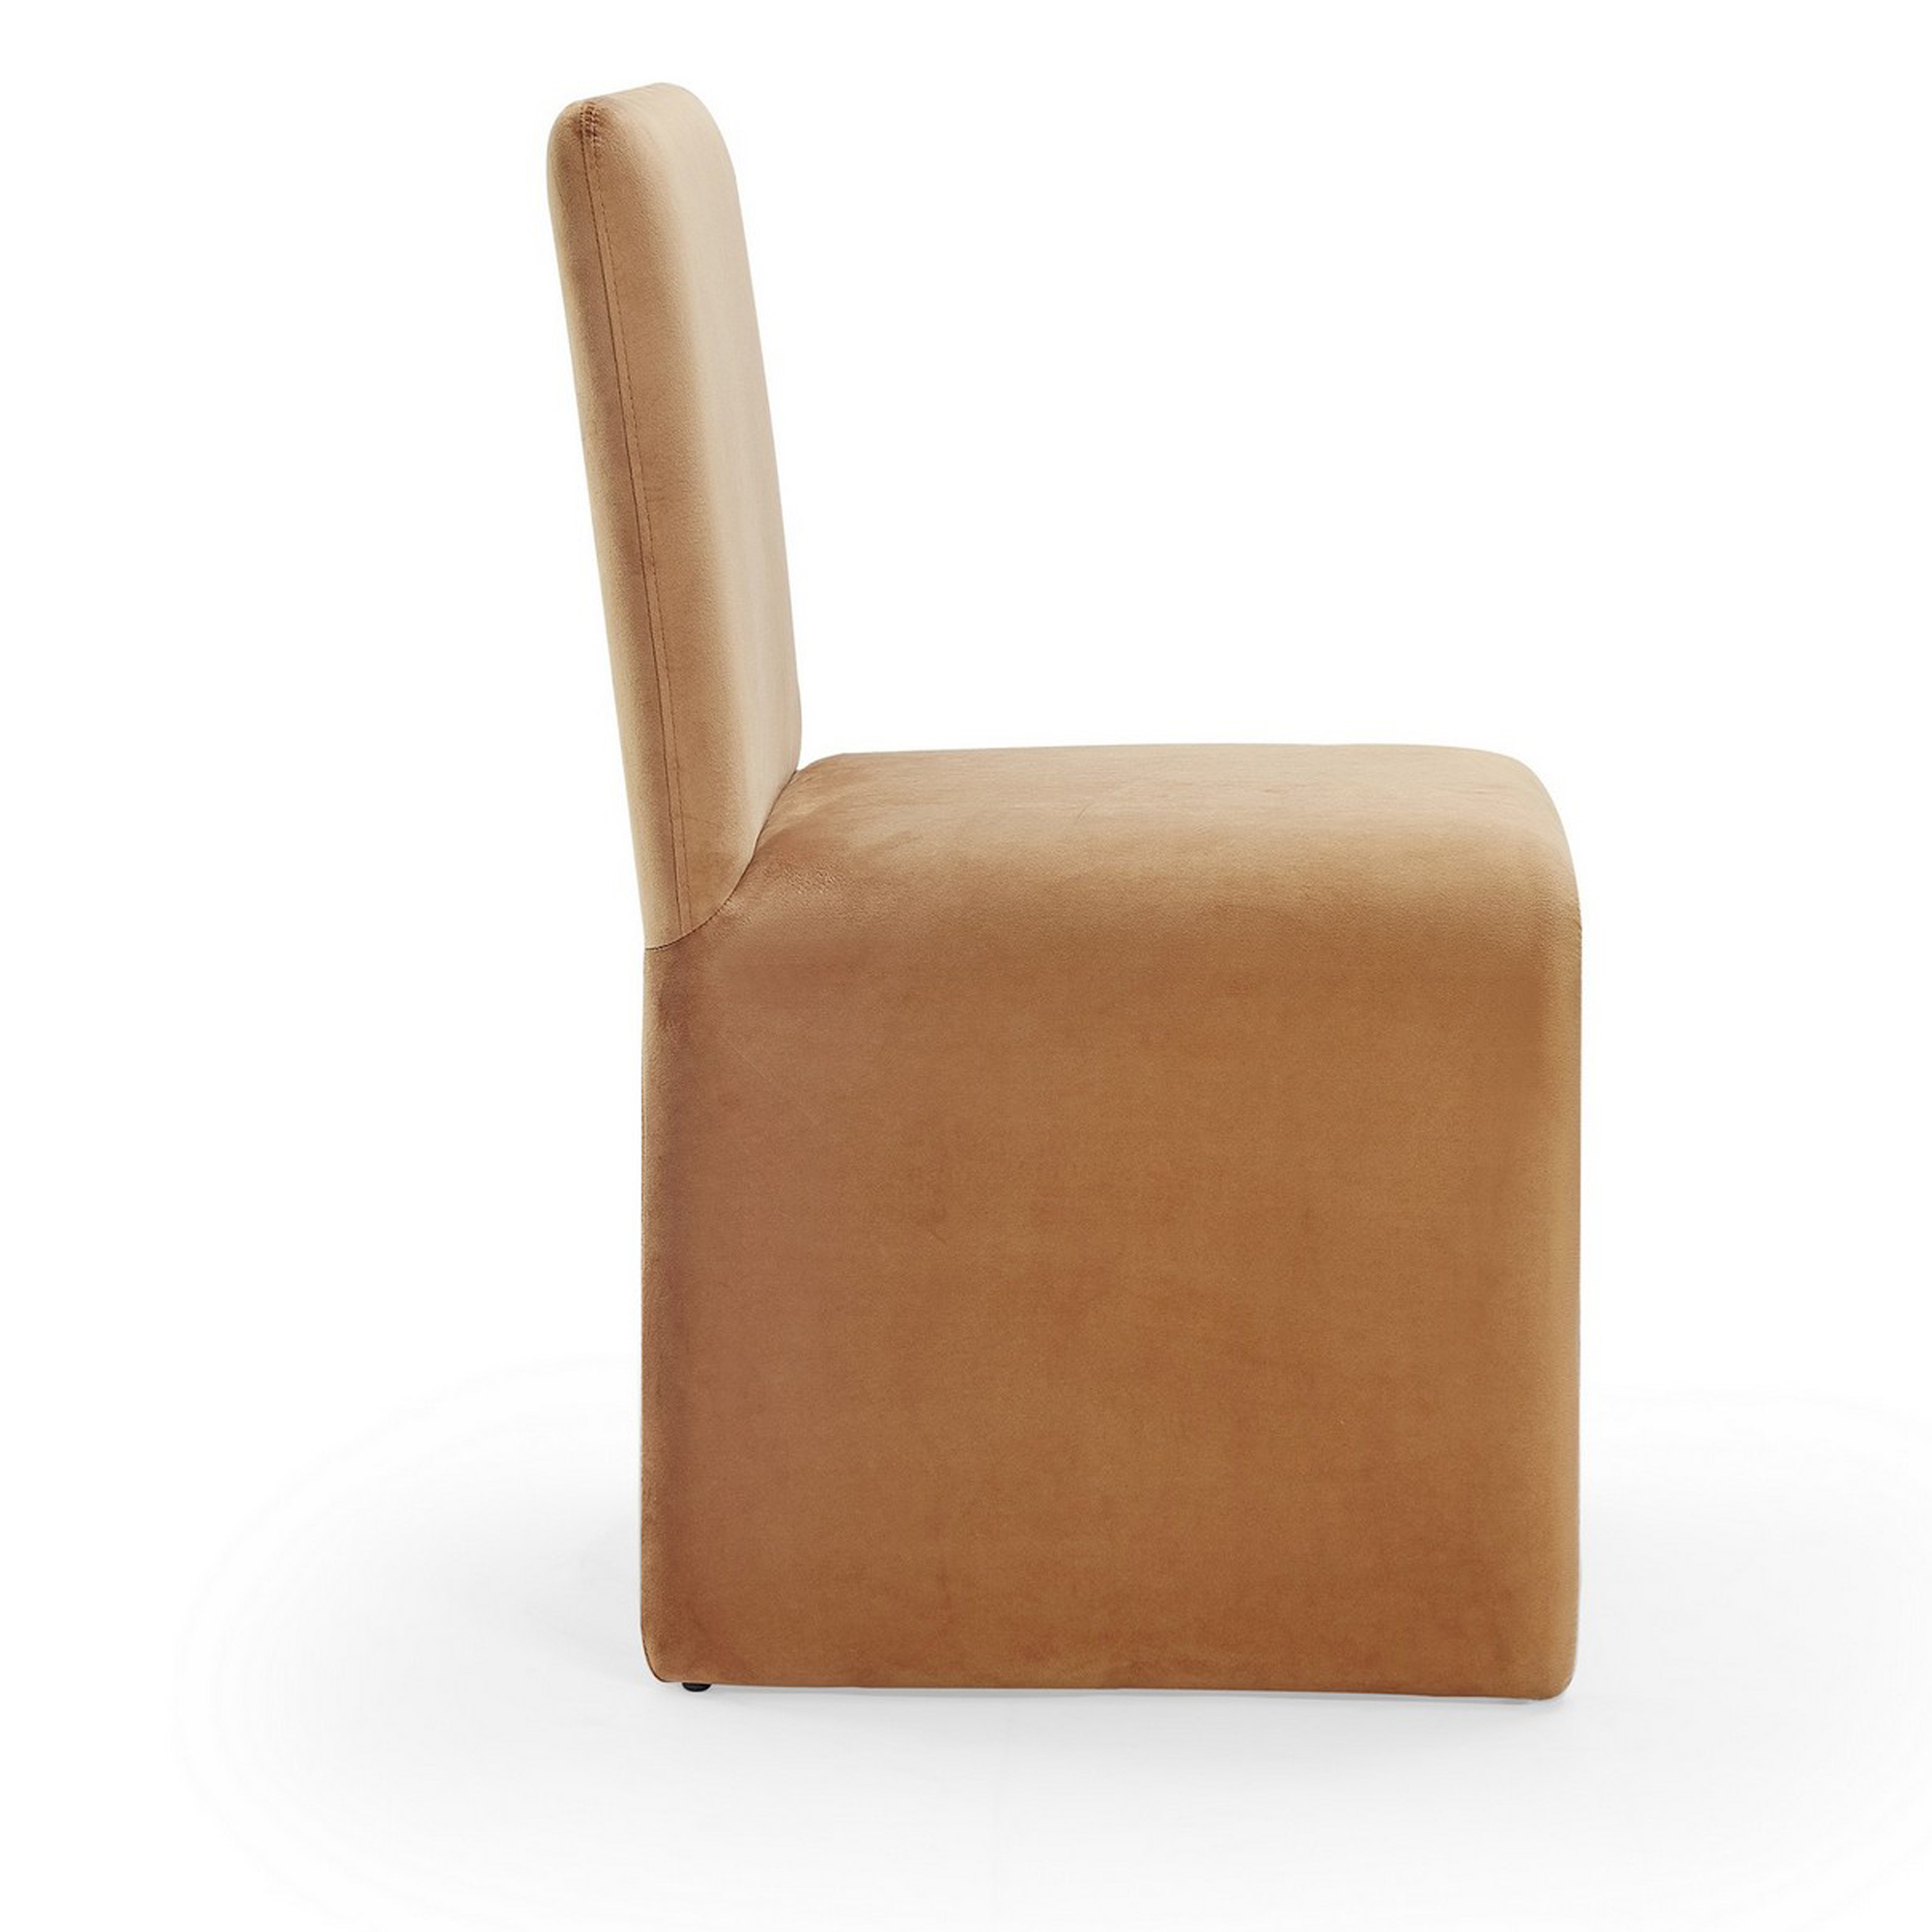 Winny 20 Inch Dining Chair, Waterfall Seat, Velvet Upholstery, Brown -Saltoro Sherpi